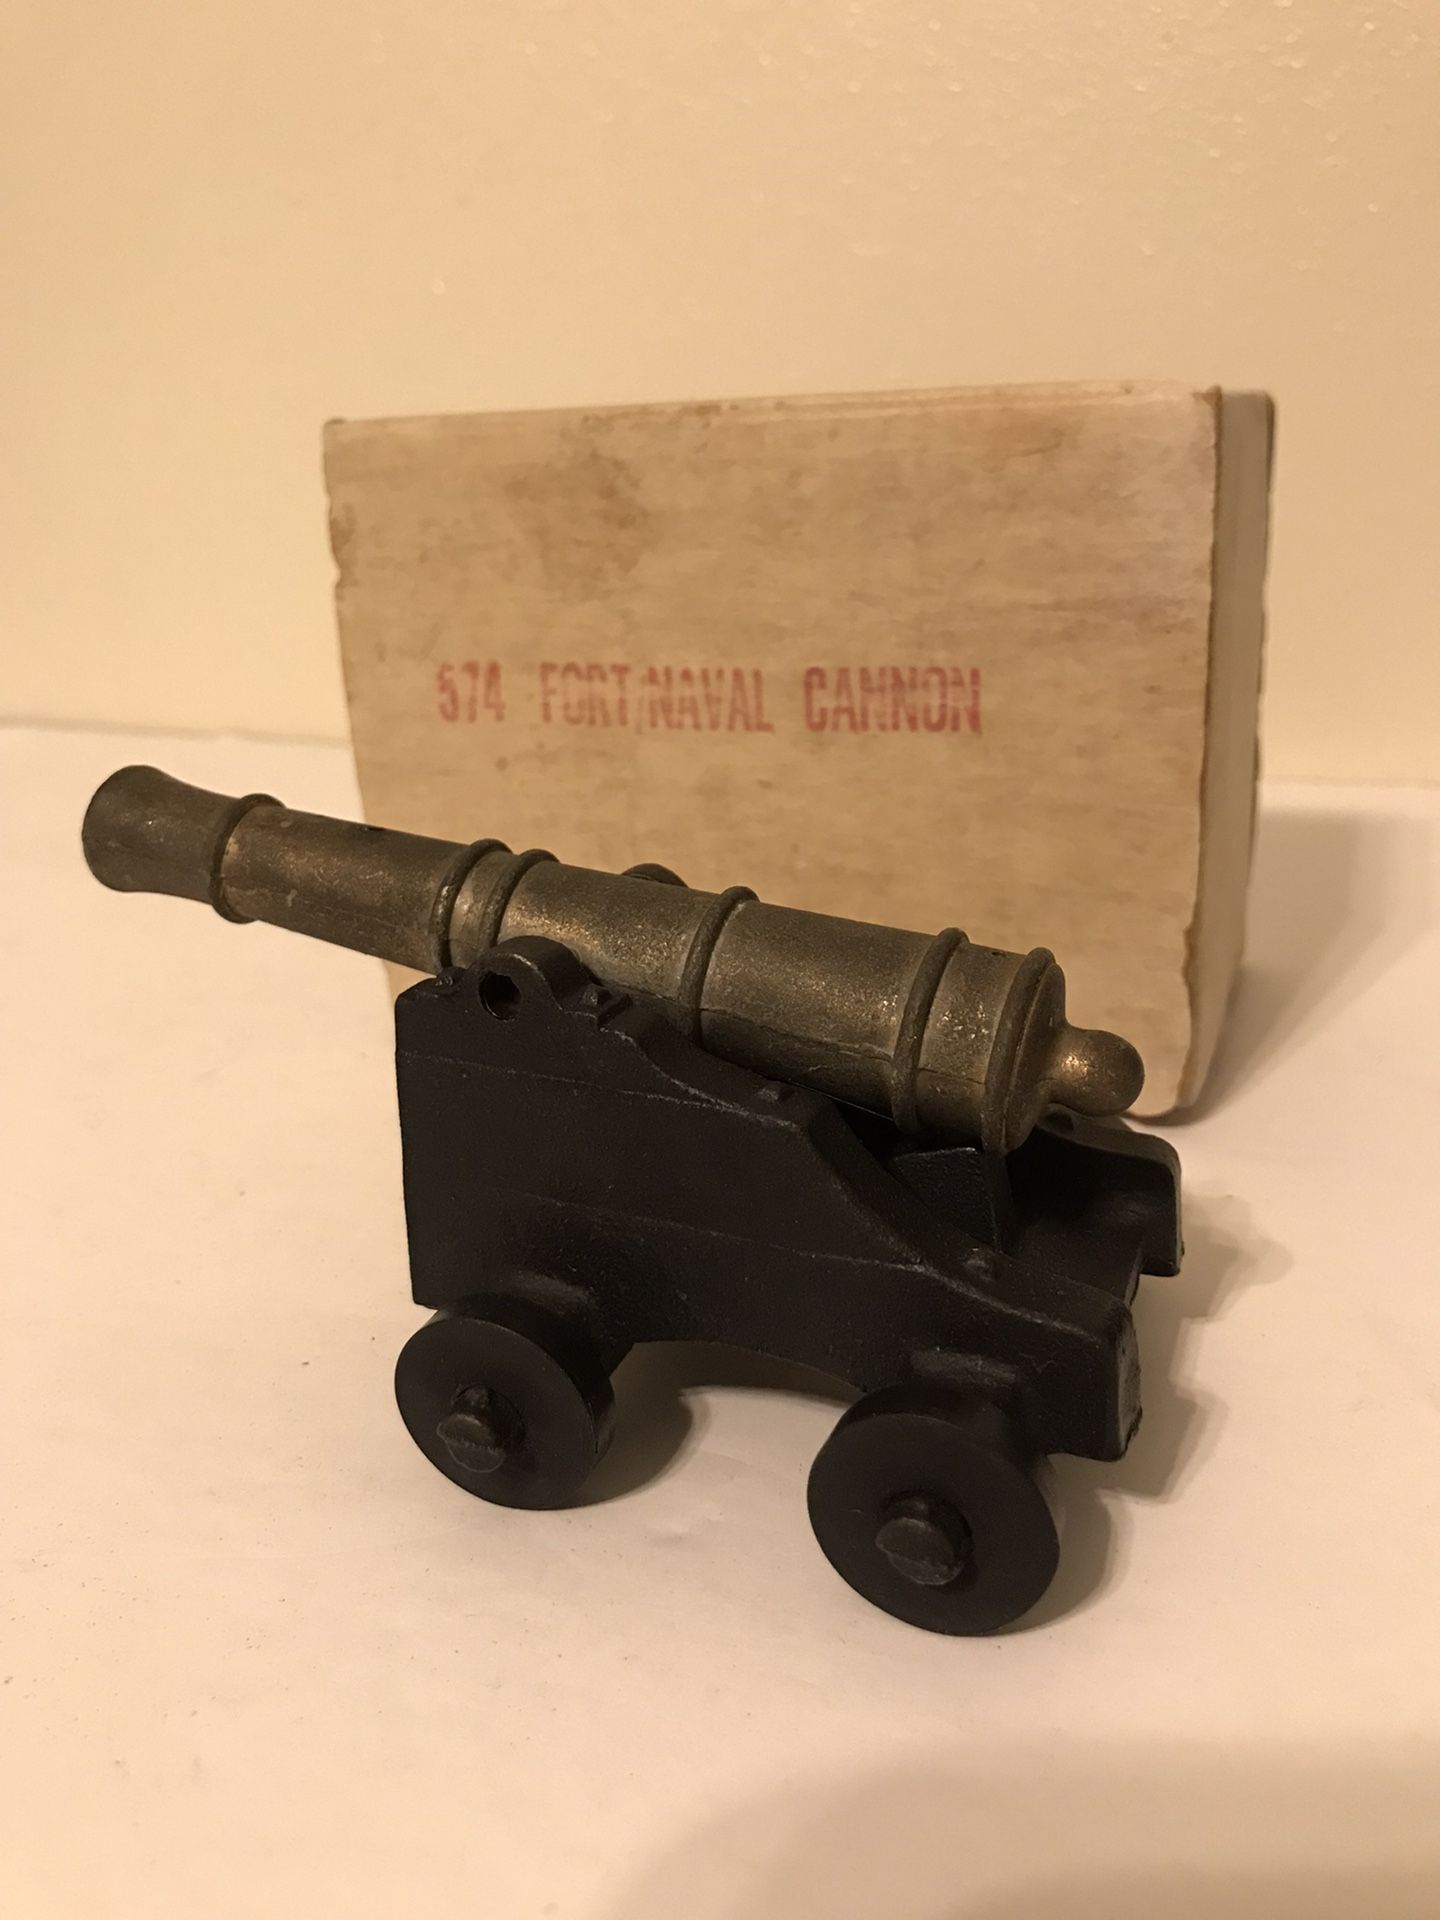 Vintage Miniature 5 1/2” Metal Penncraft Mt Penn PA 574 Fort/Naval Cannon